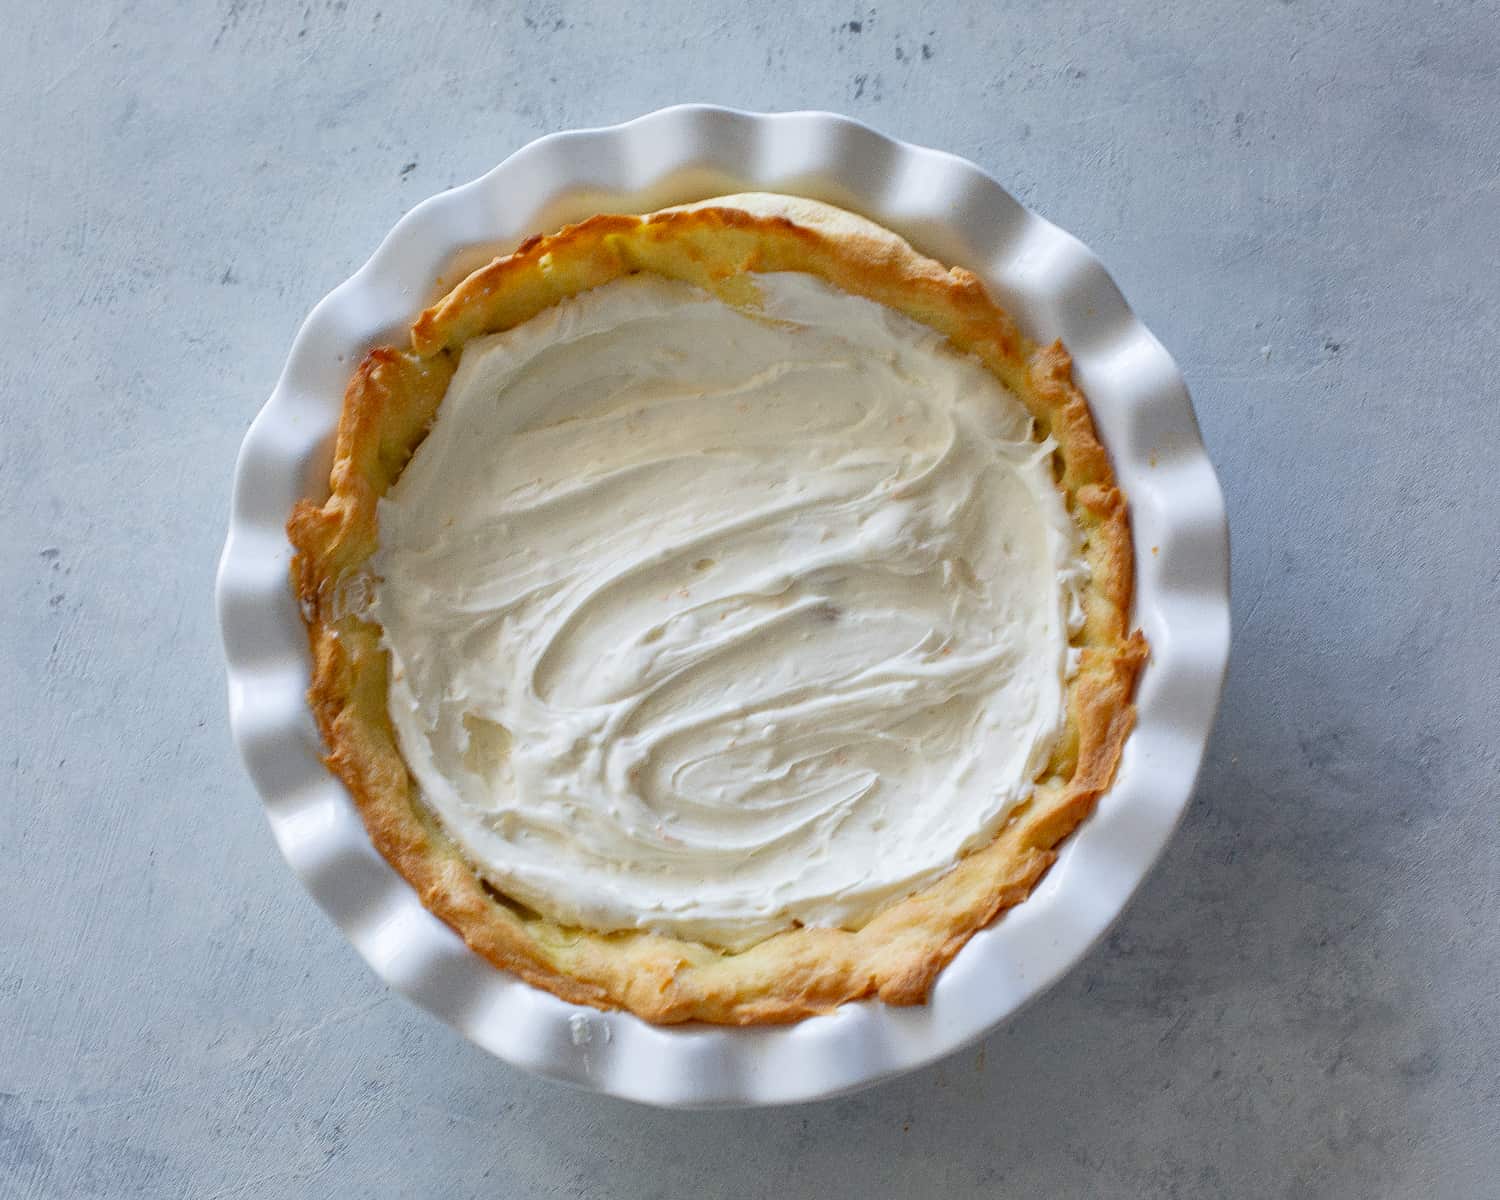 cream in a pie